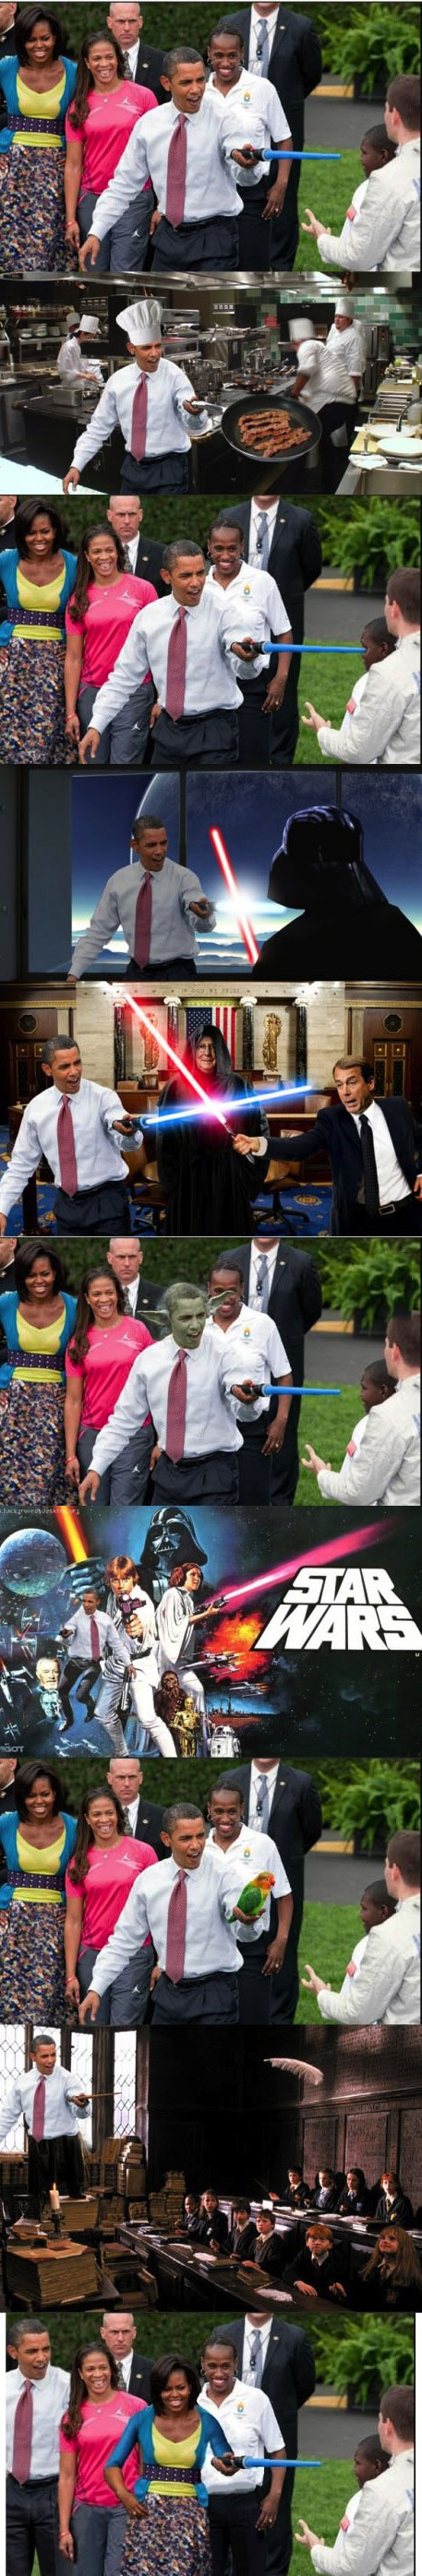 obama holding a light saber, photoshop